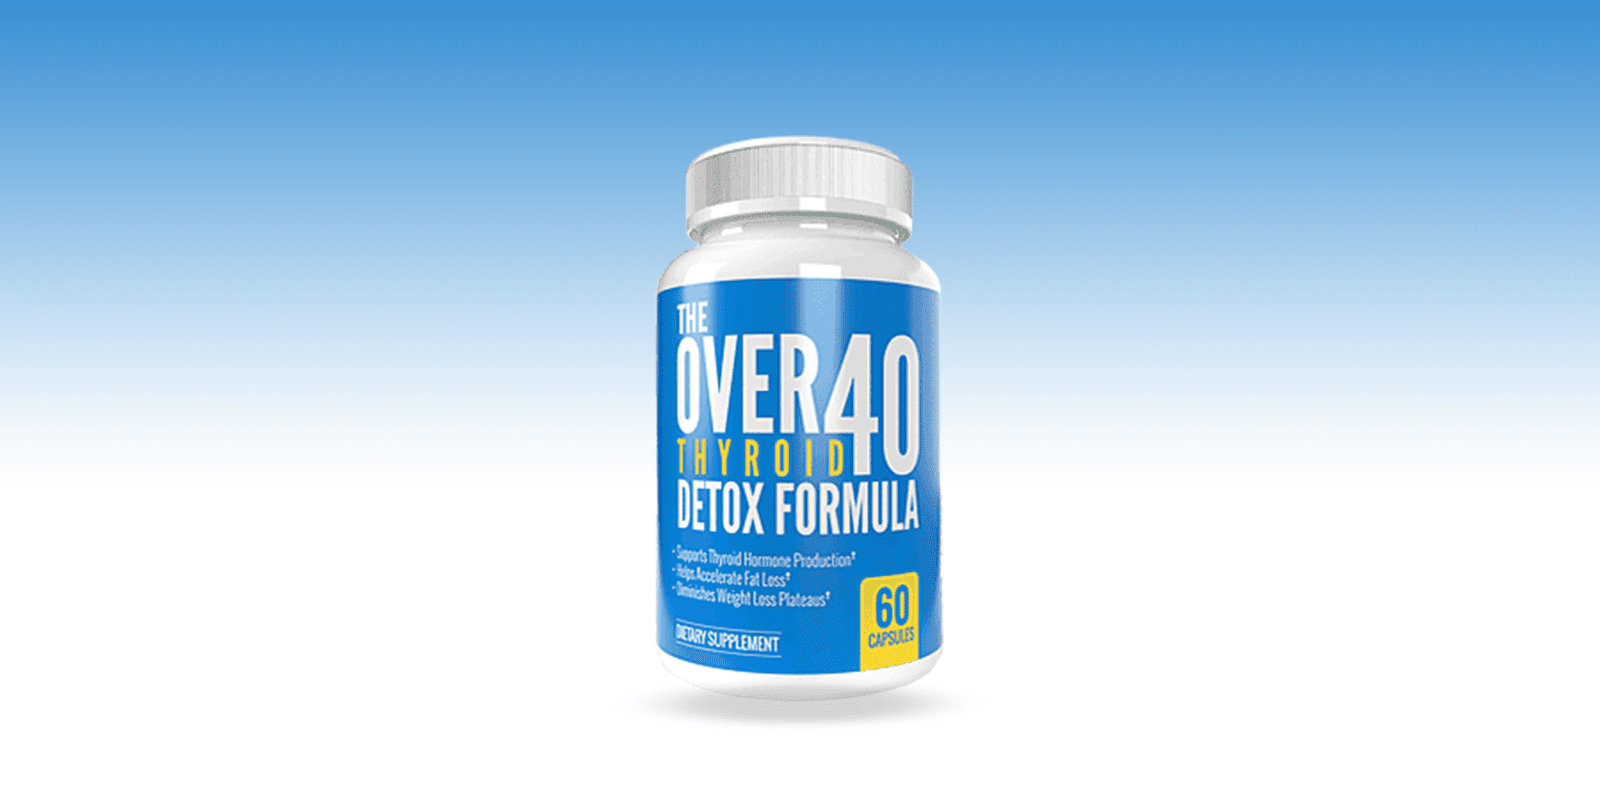 Over 40 Thyroid Detox Formula Reviews